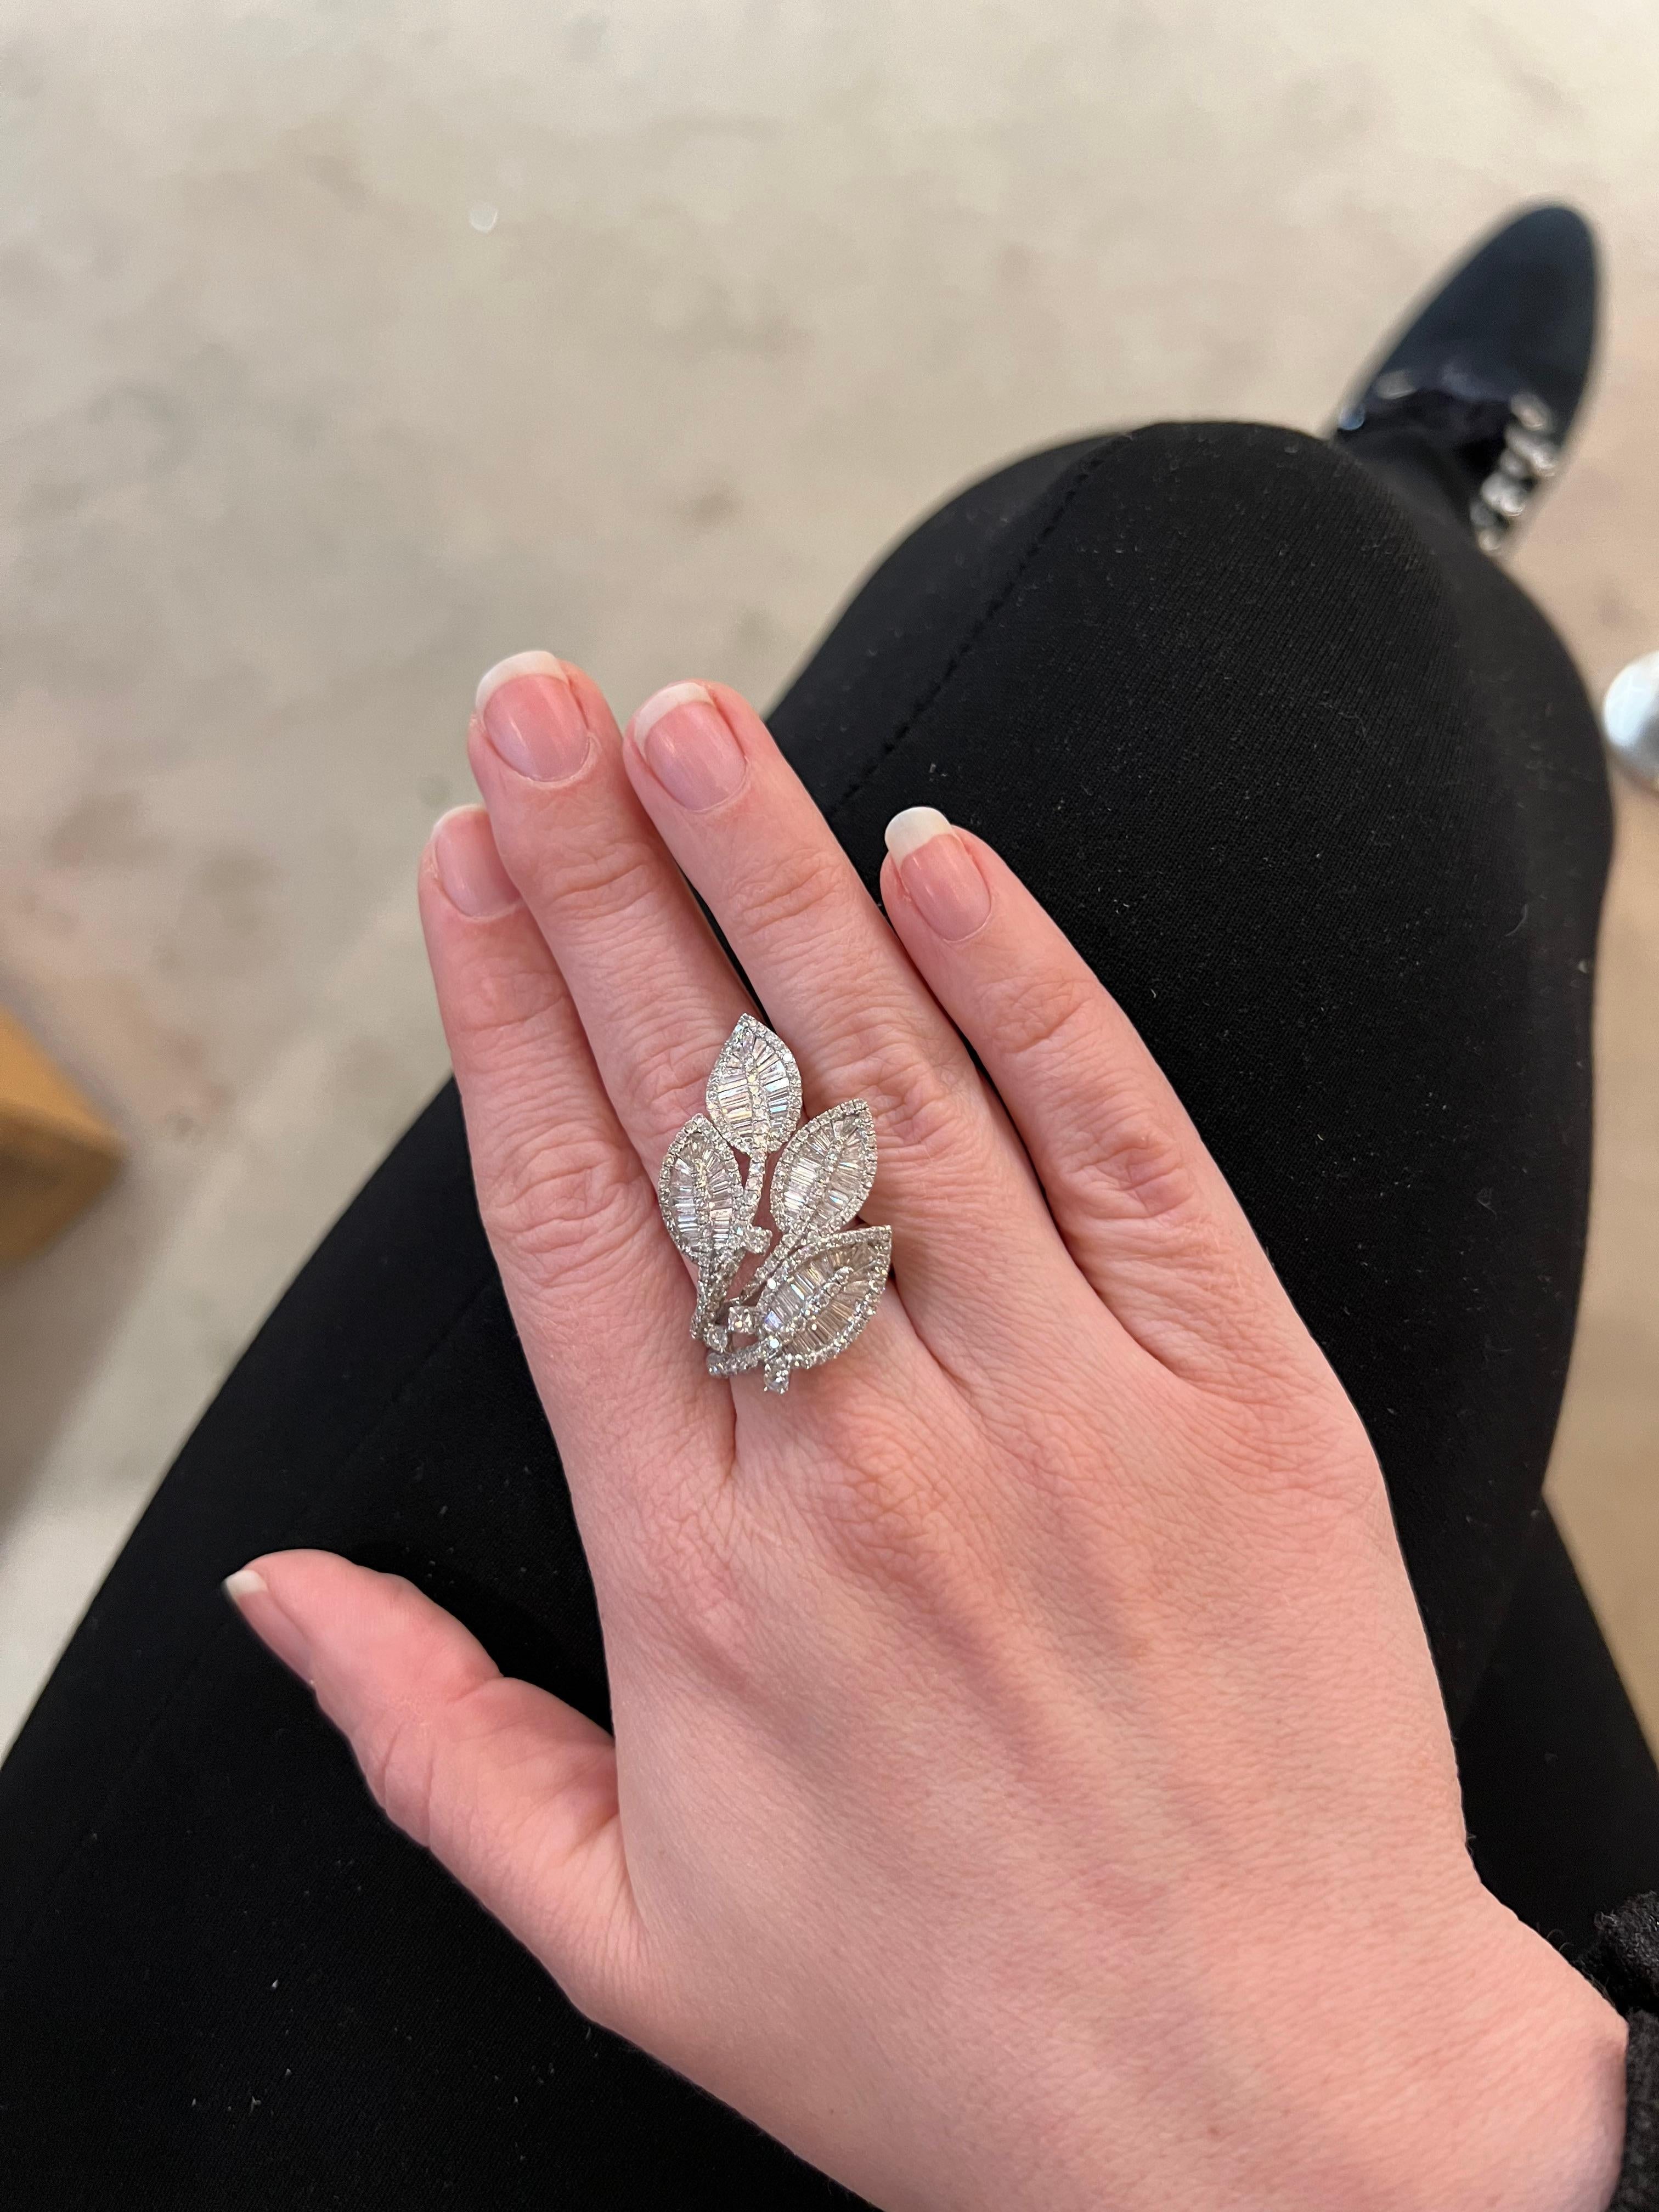 Women's Leaves ring diamonds set on white gold For Sale